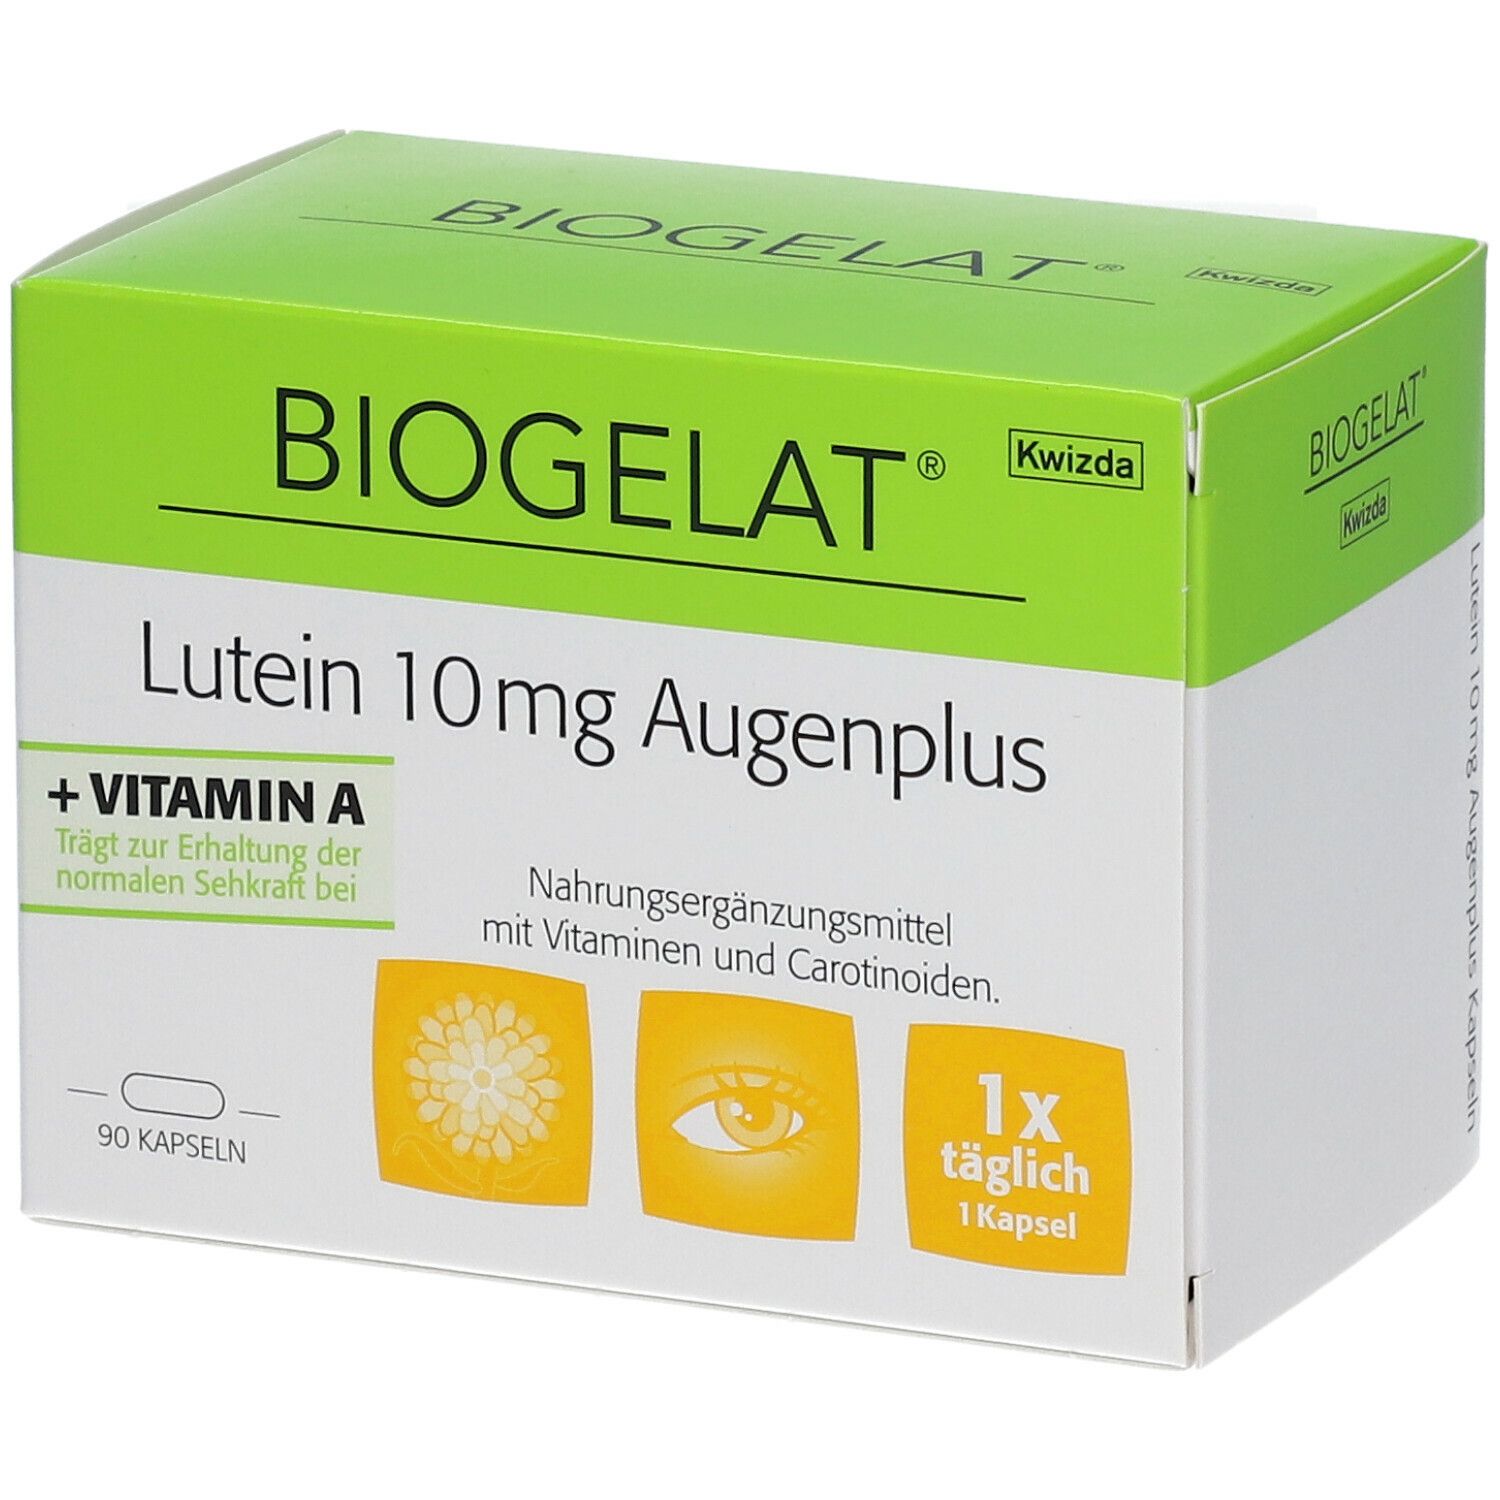 Biogelat® Lutein 10 mg eye plus